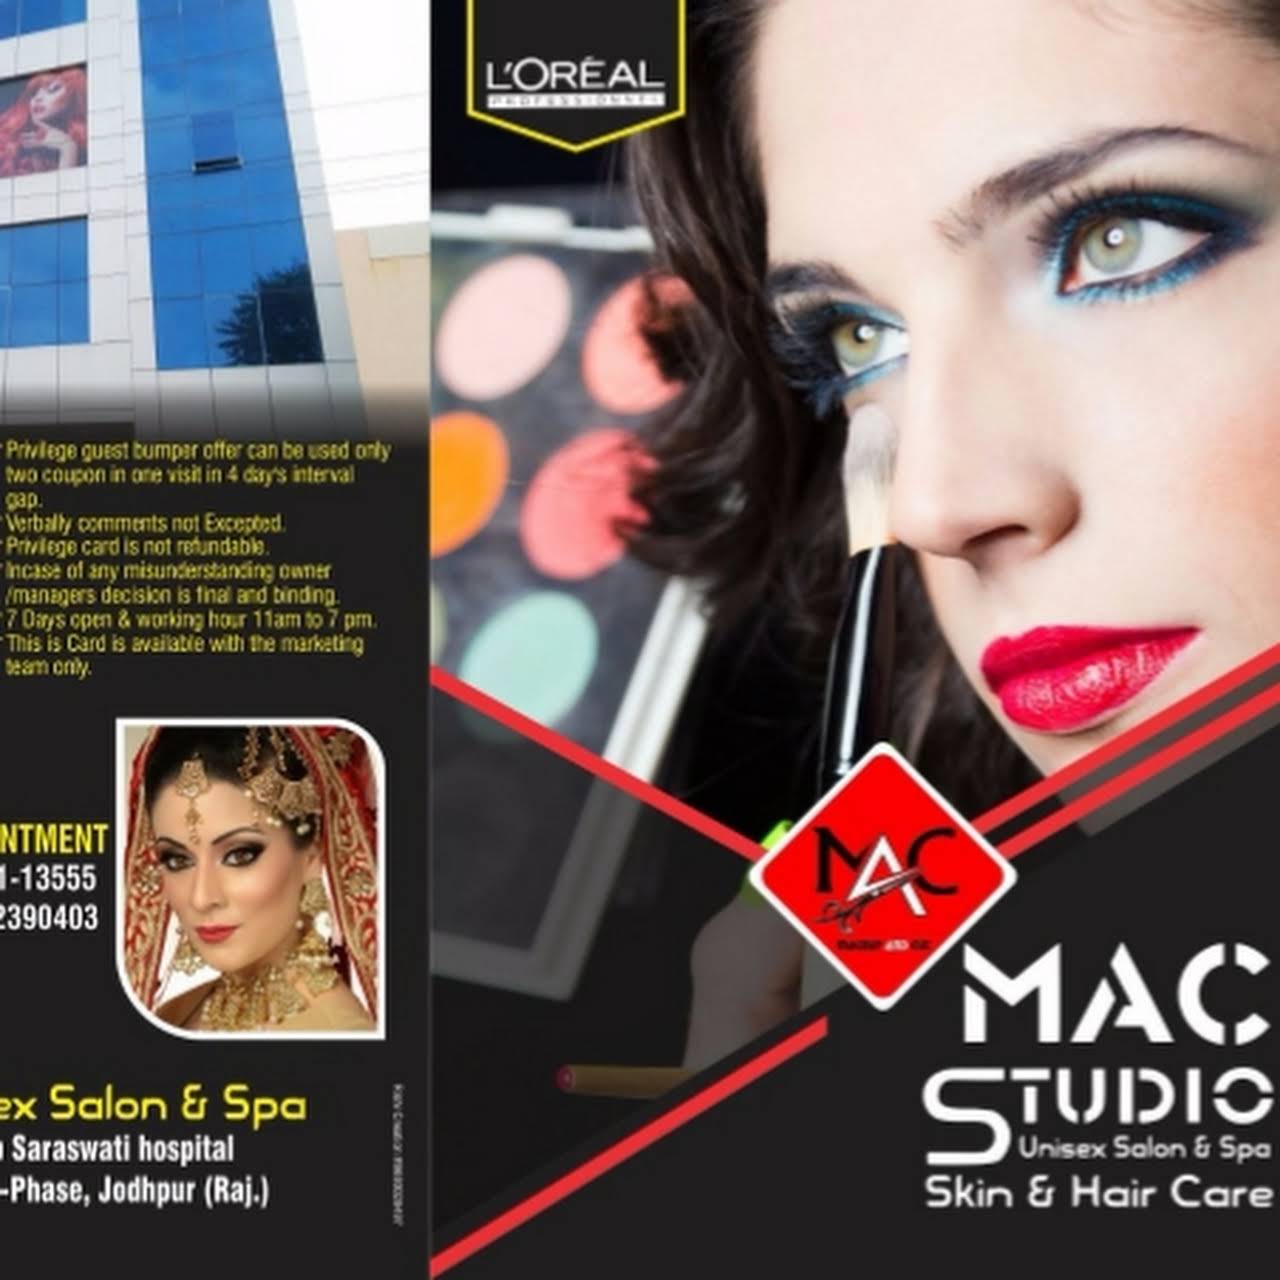 MAC Studio unisex saloon - Jodhpur